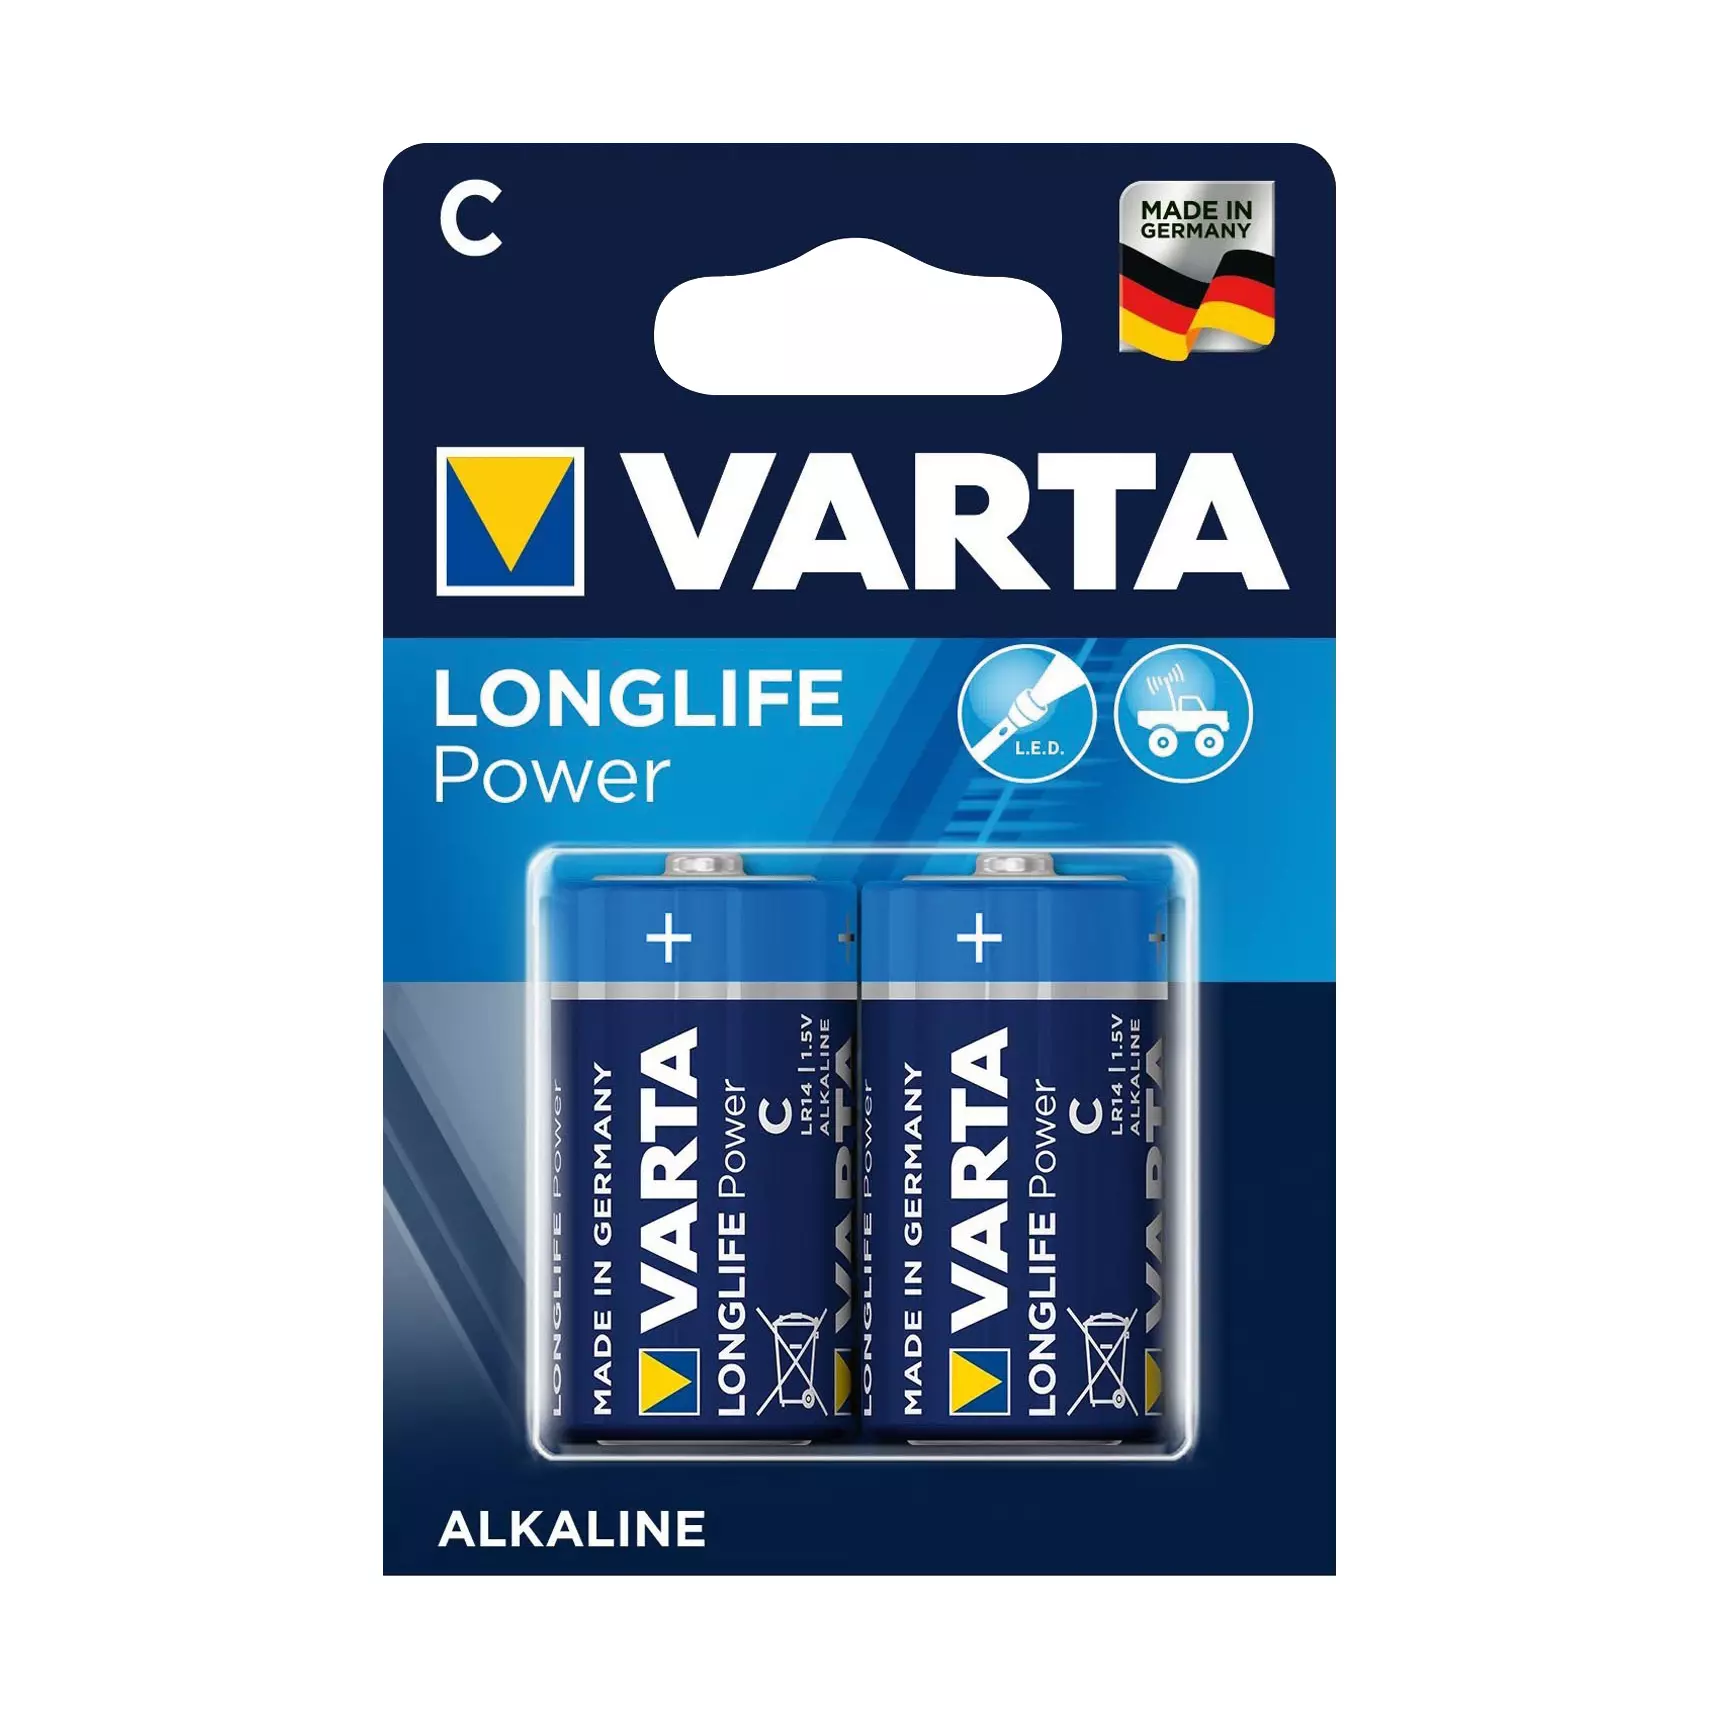 VARTA Longlife Power Baby LR14, 2 pcs